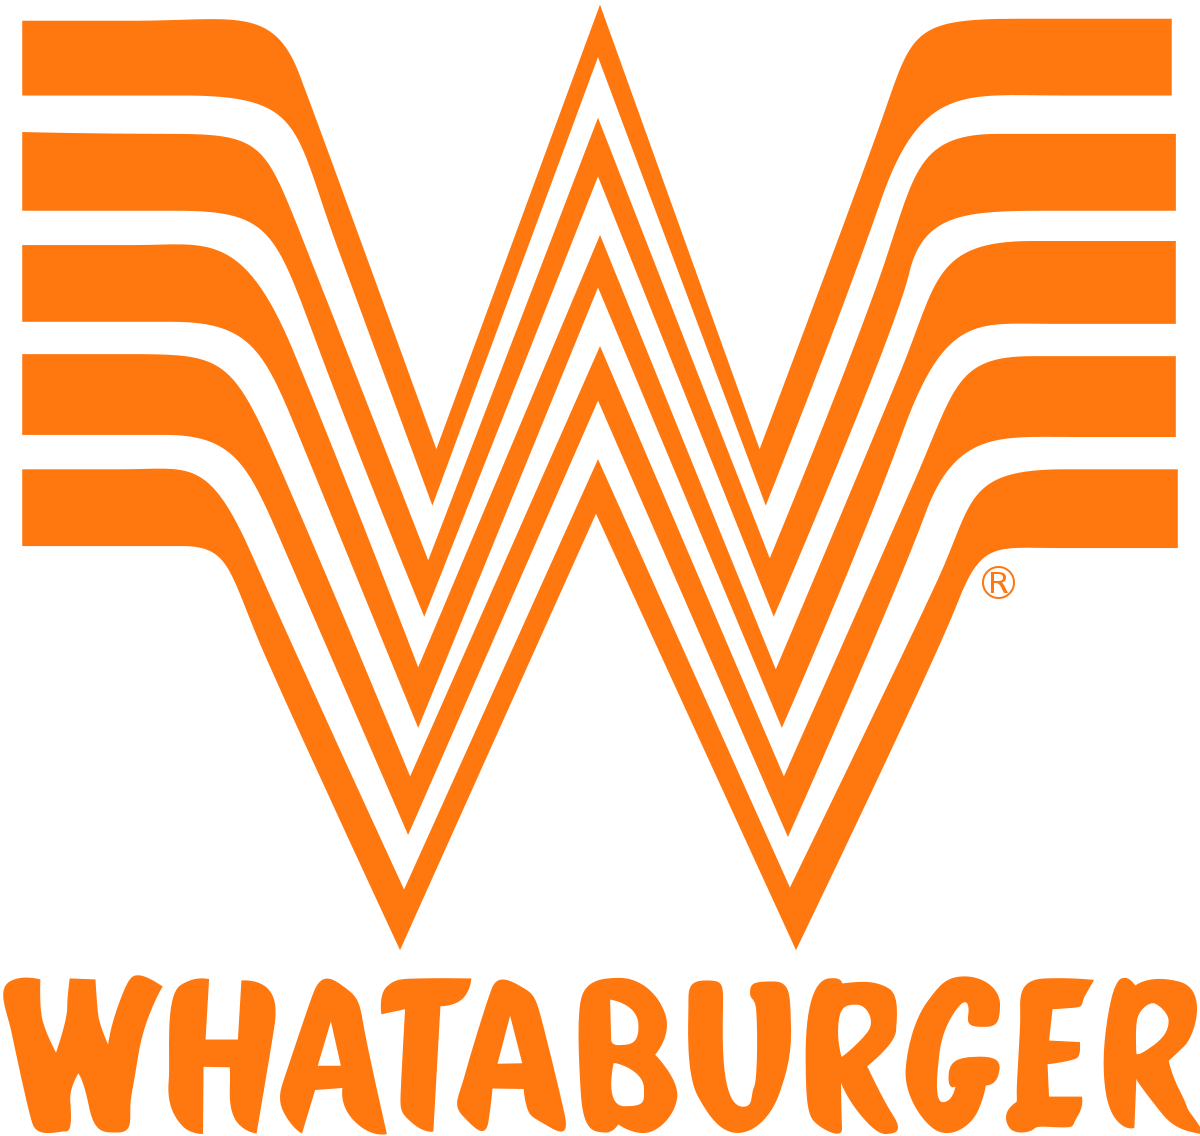 Famous Fast Food Restaurant Logo - Whataburger